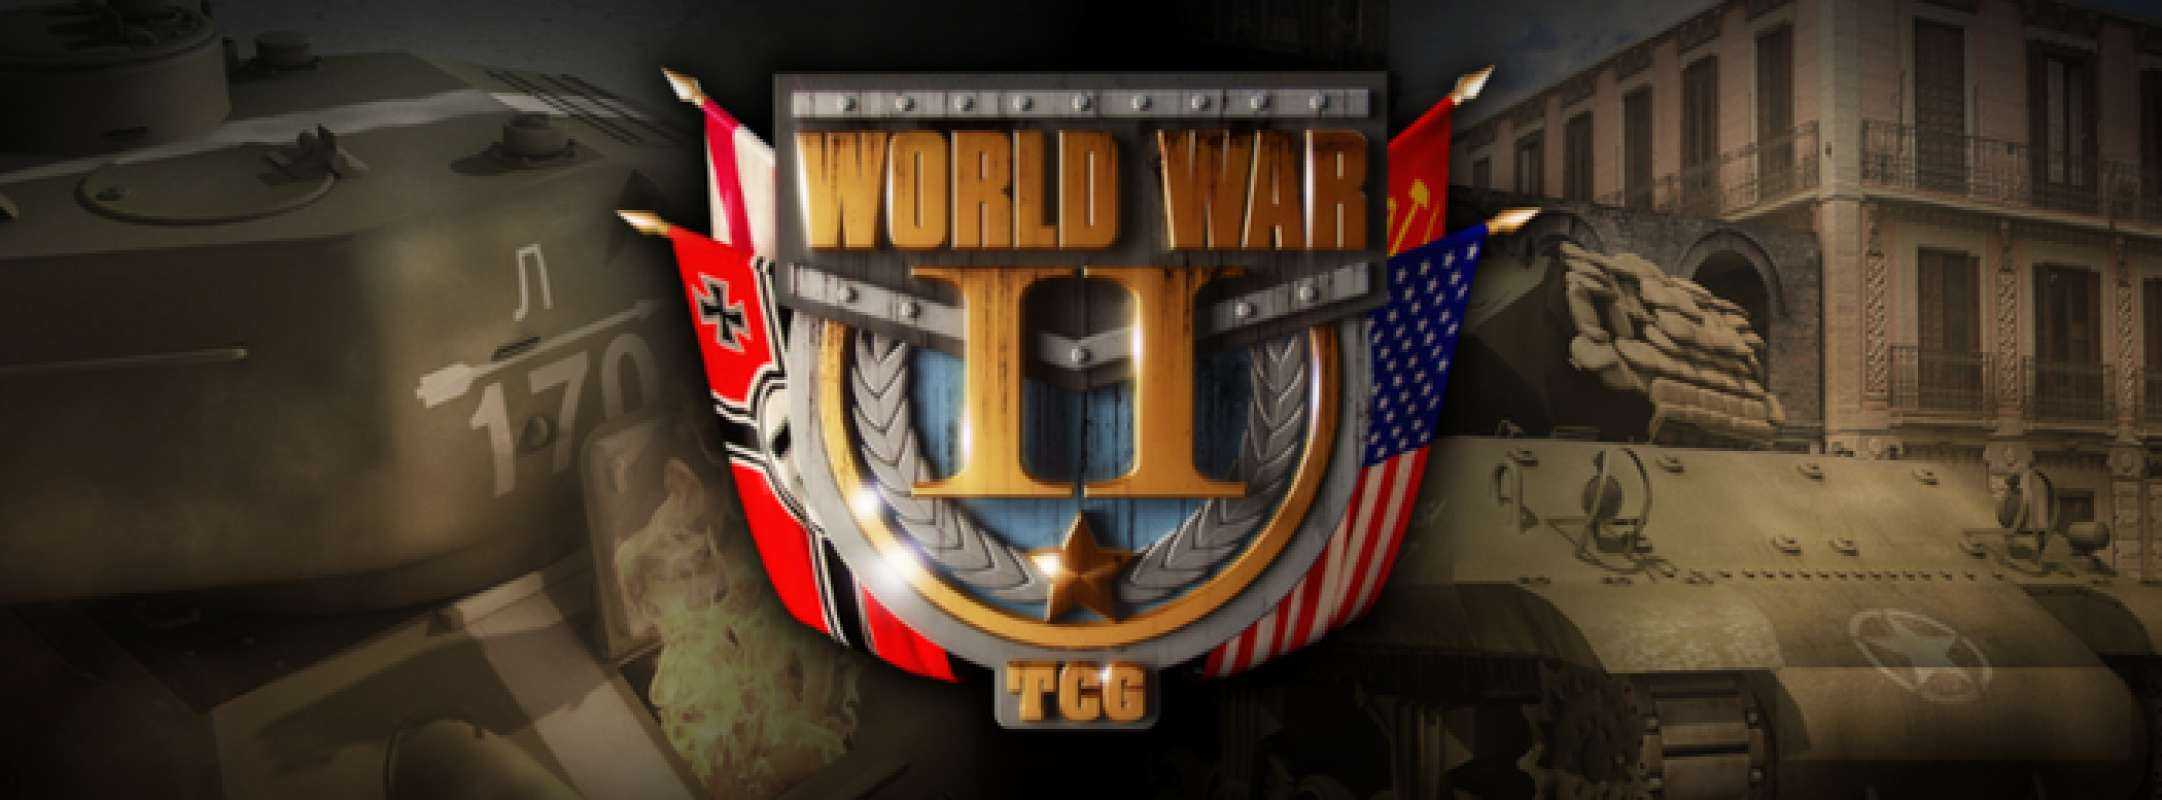 World War II: TCG